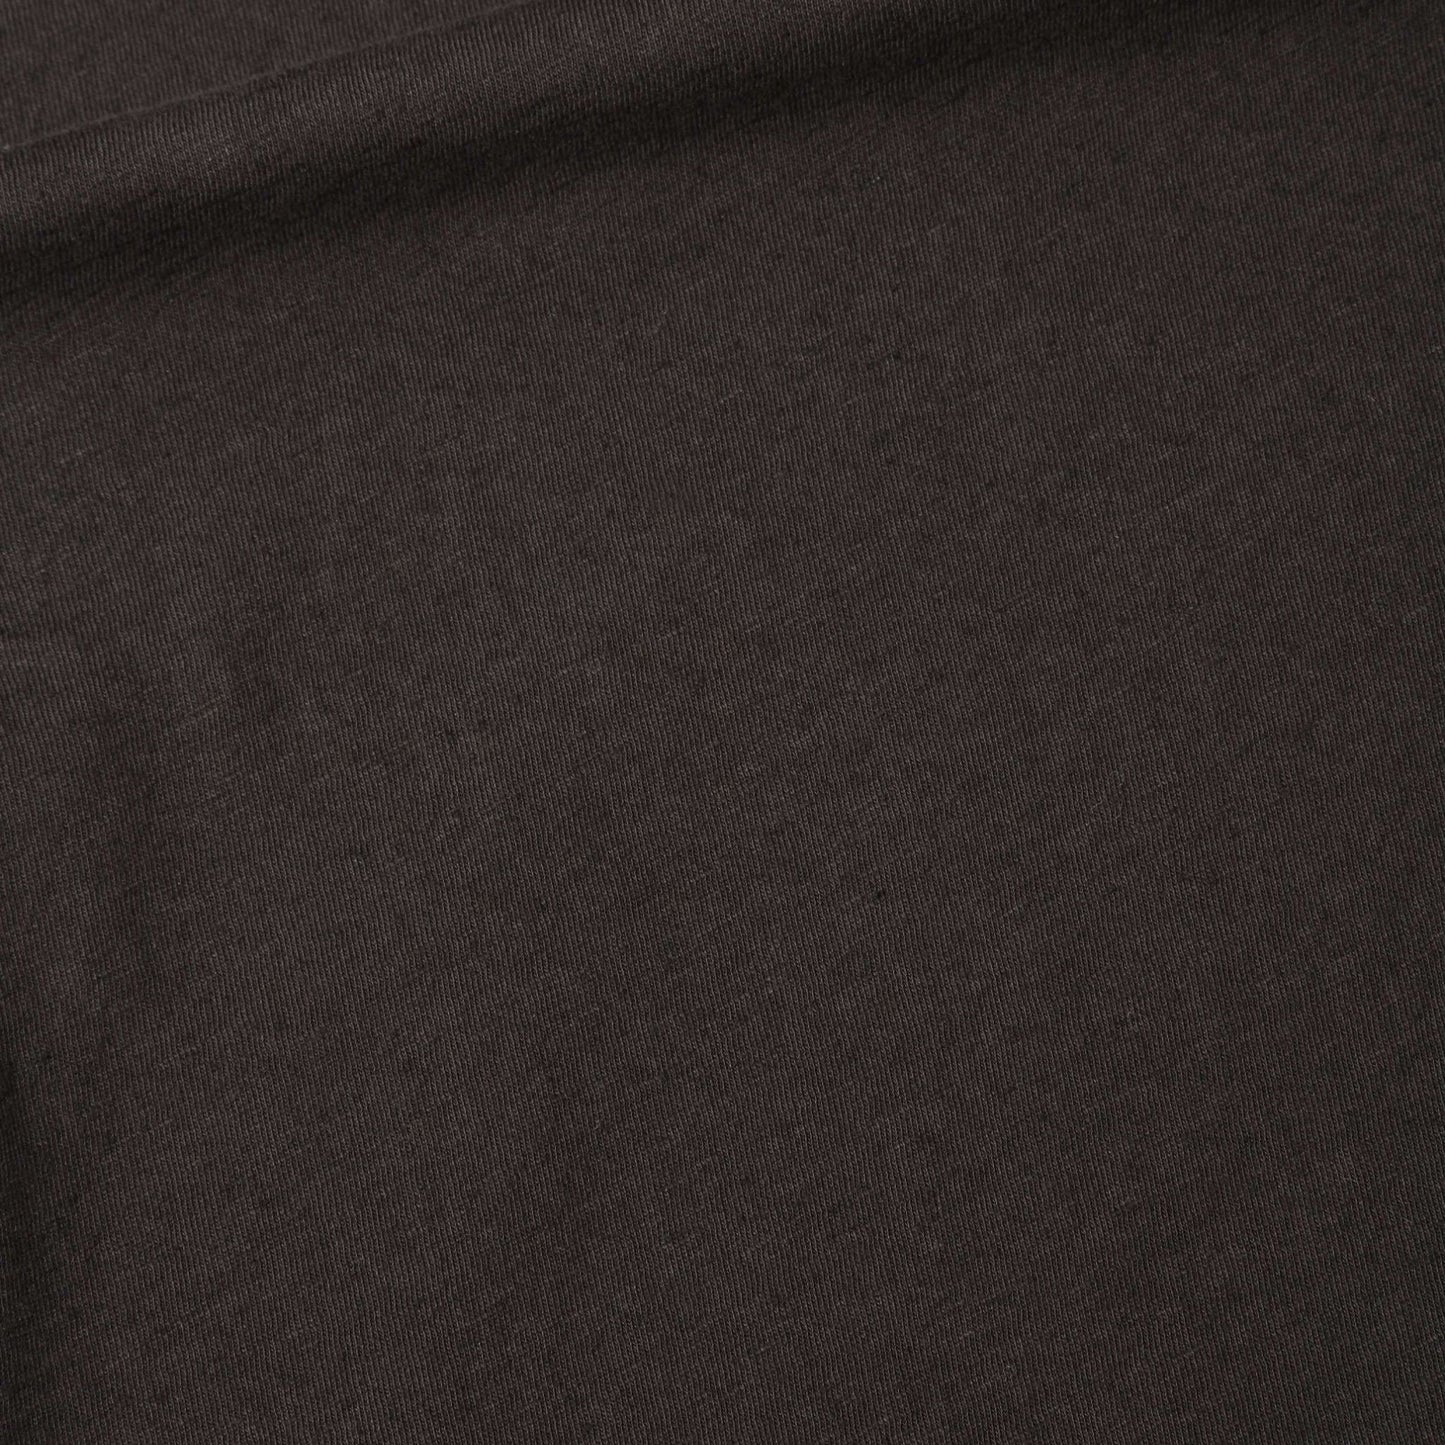 MHL - Simple T-Shirt